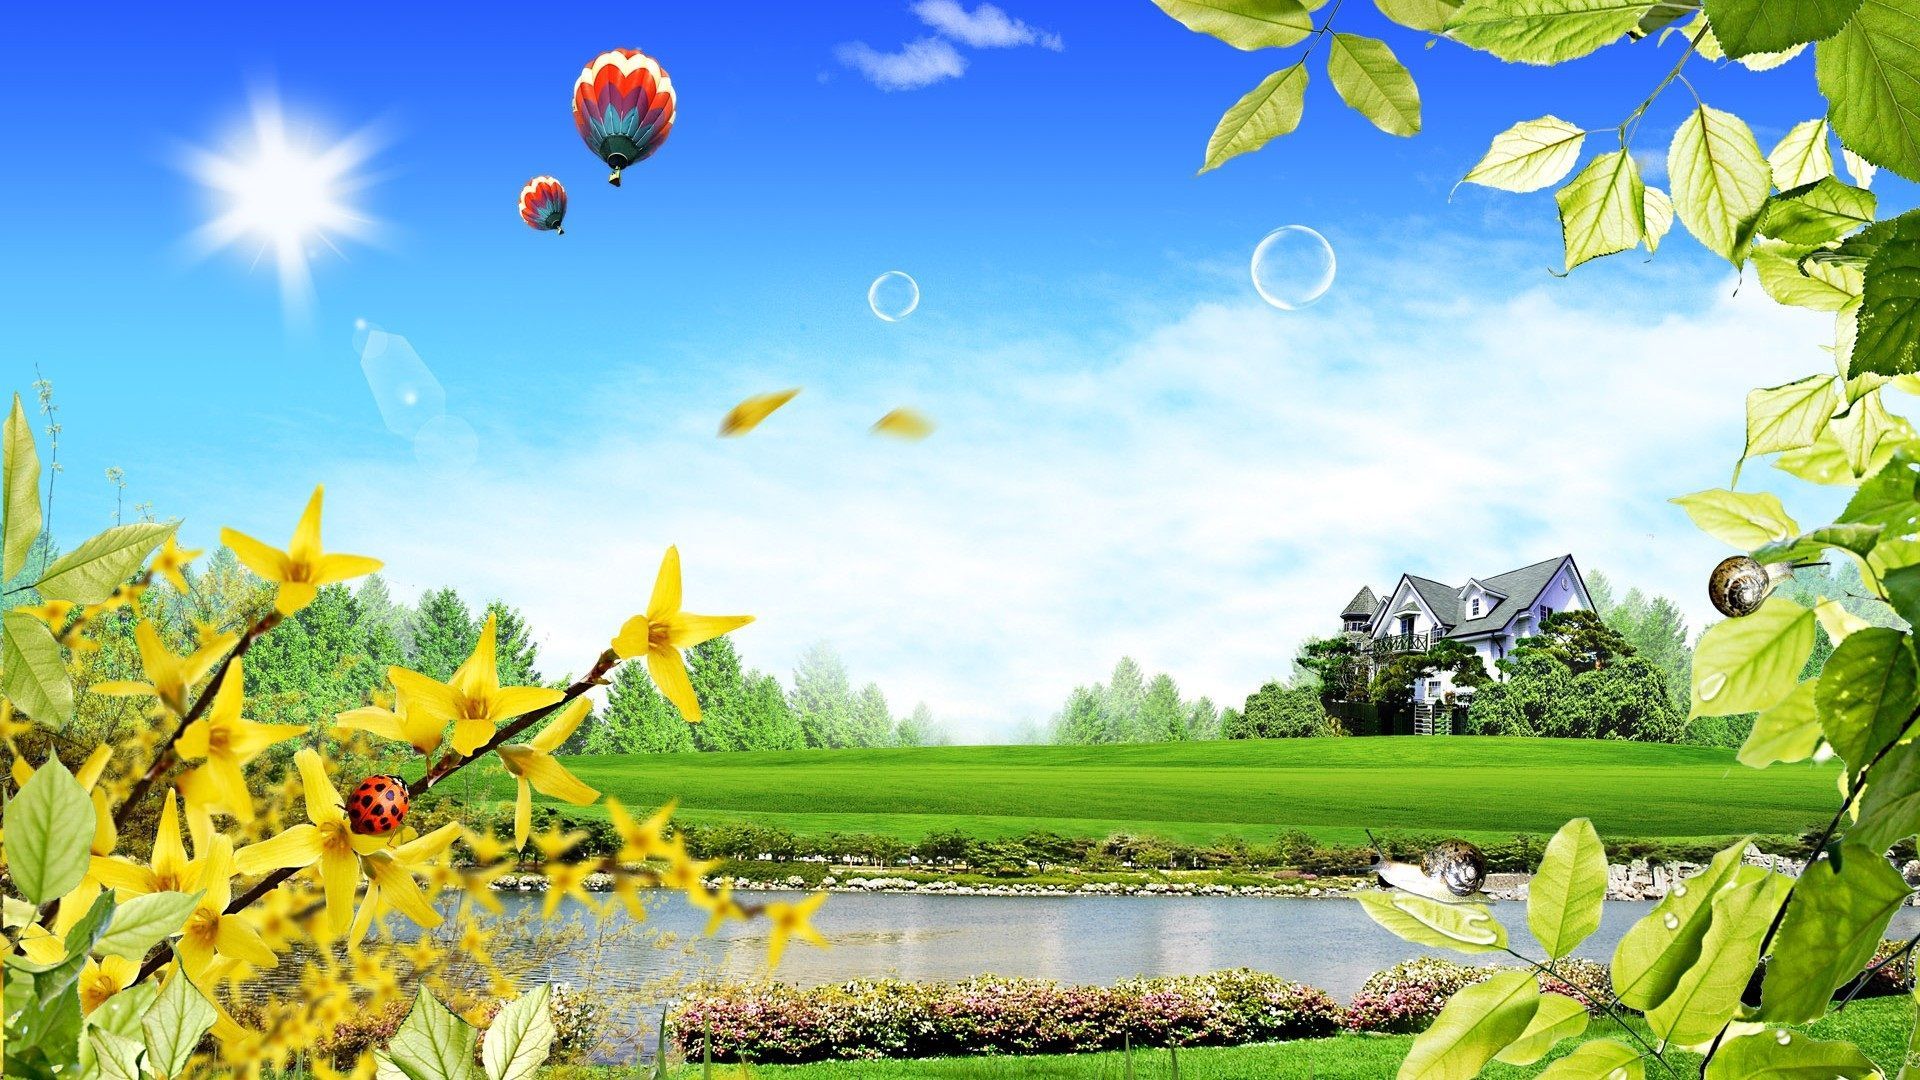 Digital Art of Balloon and Sweet Home HD Wallpaper | HD Wallpapers ...